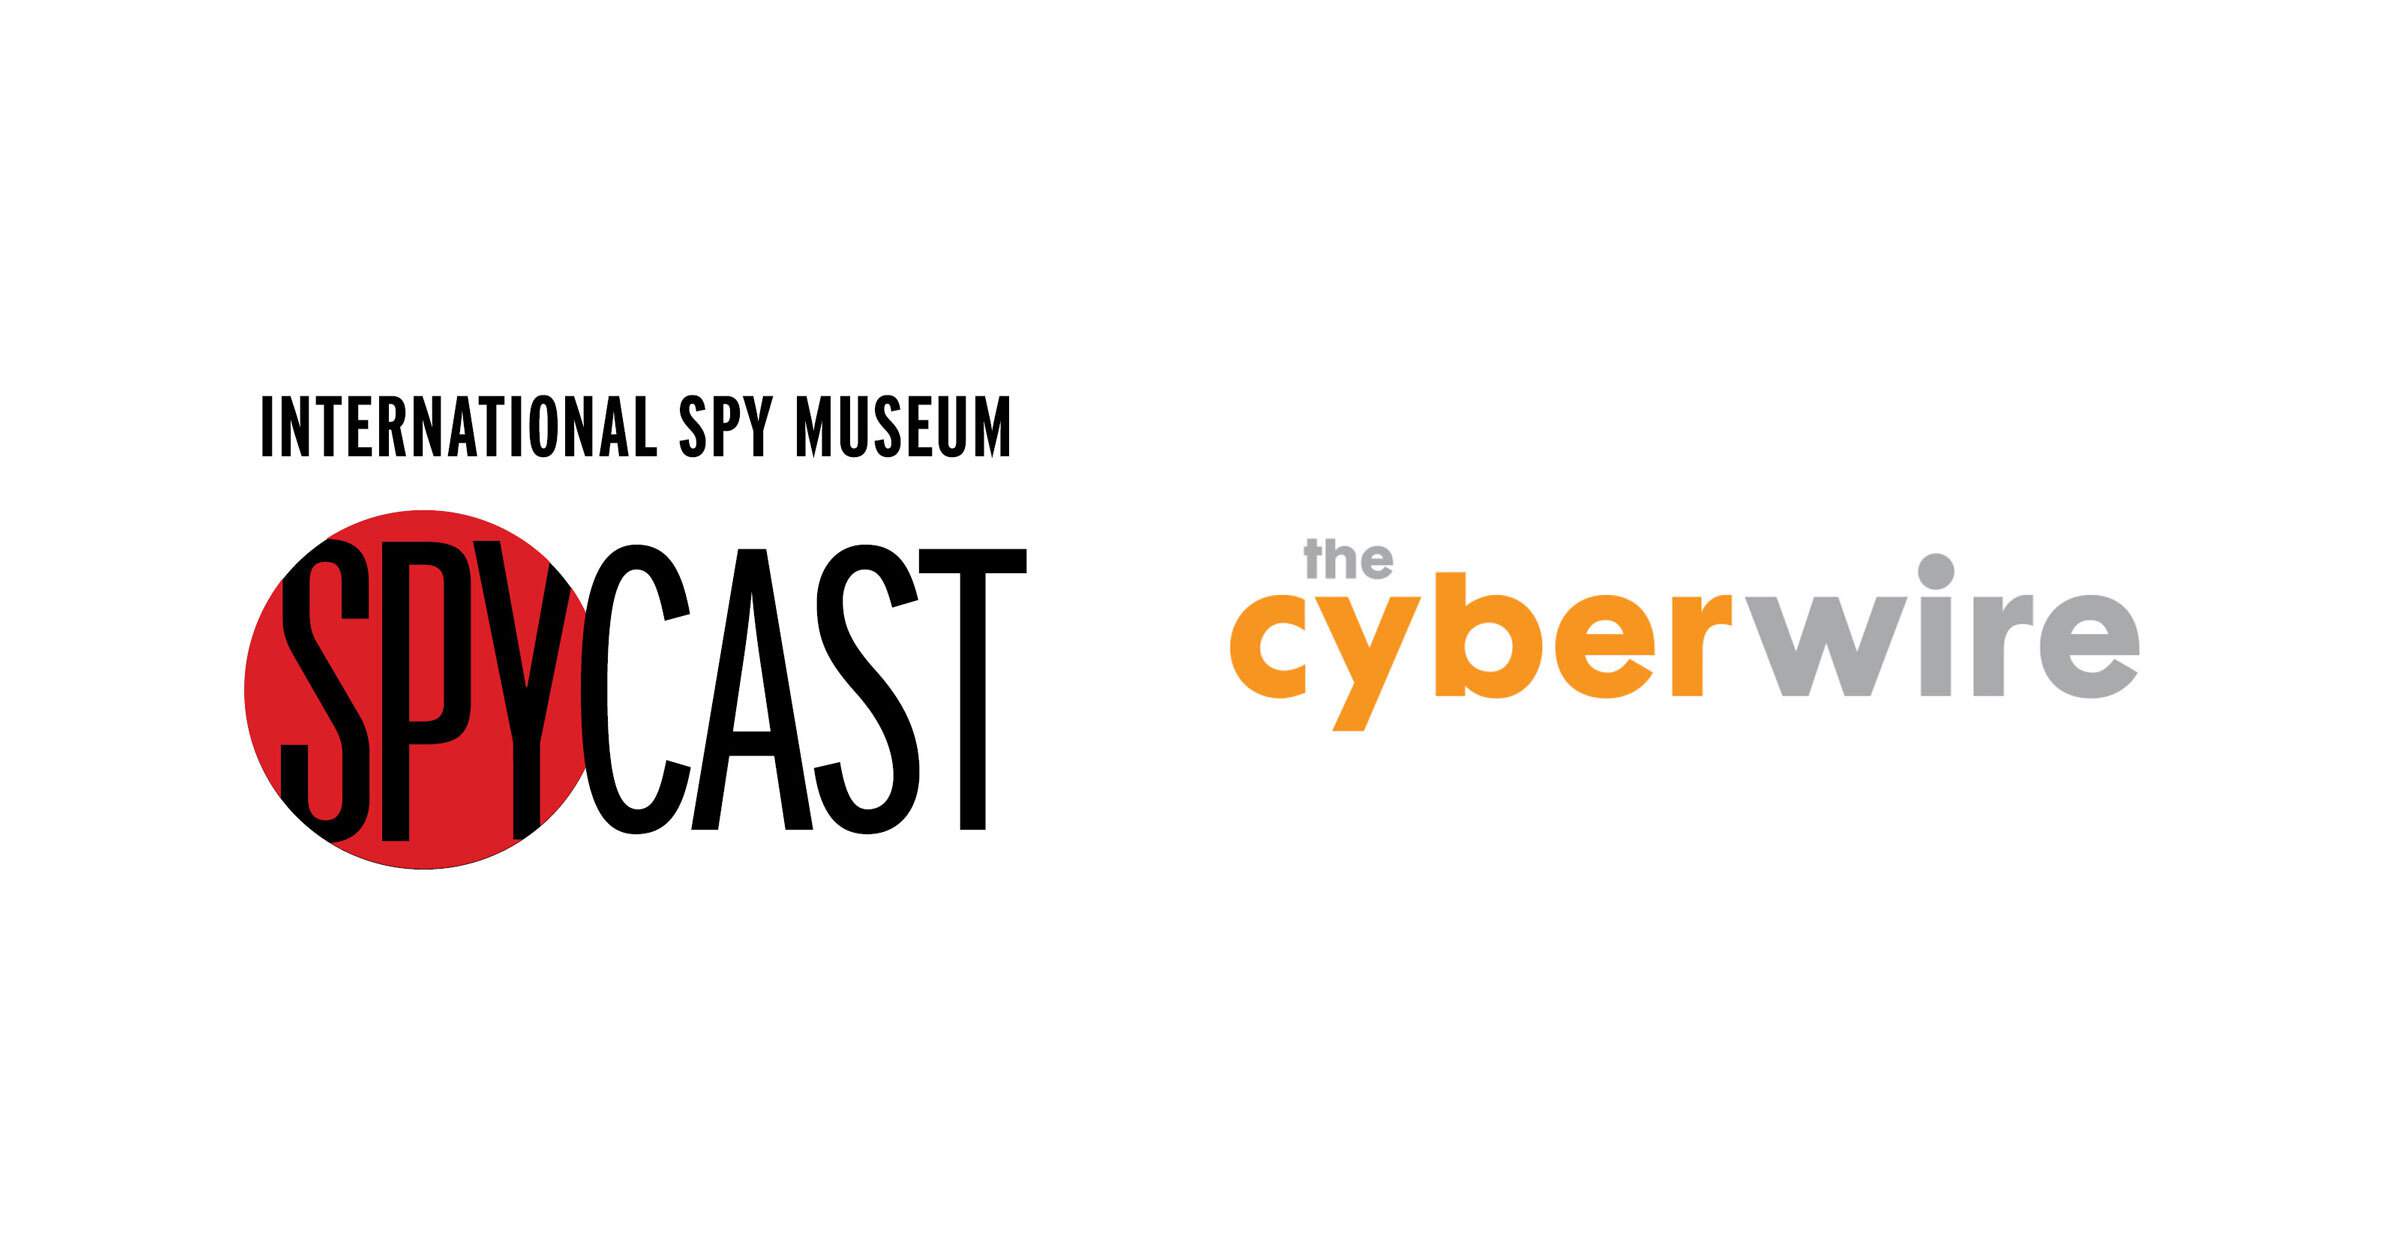 International Spy Museum’s Popular Espionage Podcast, SpyCast, joins the CyberWire Network